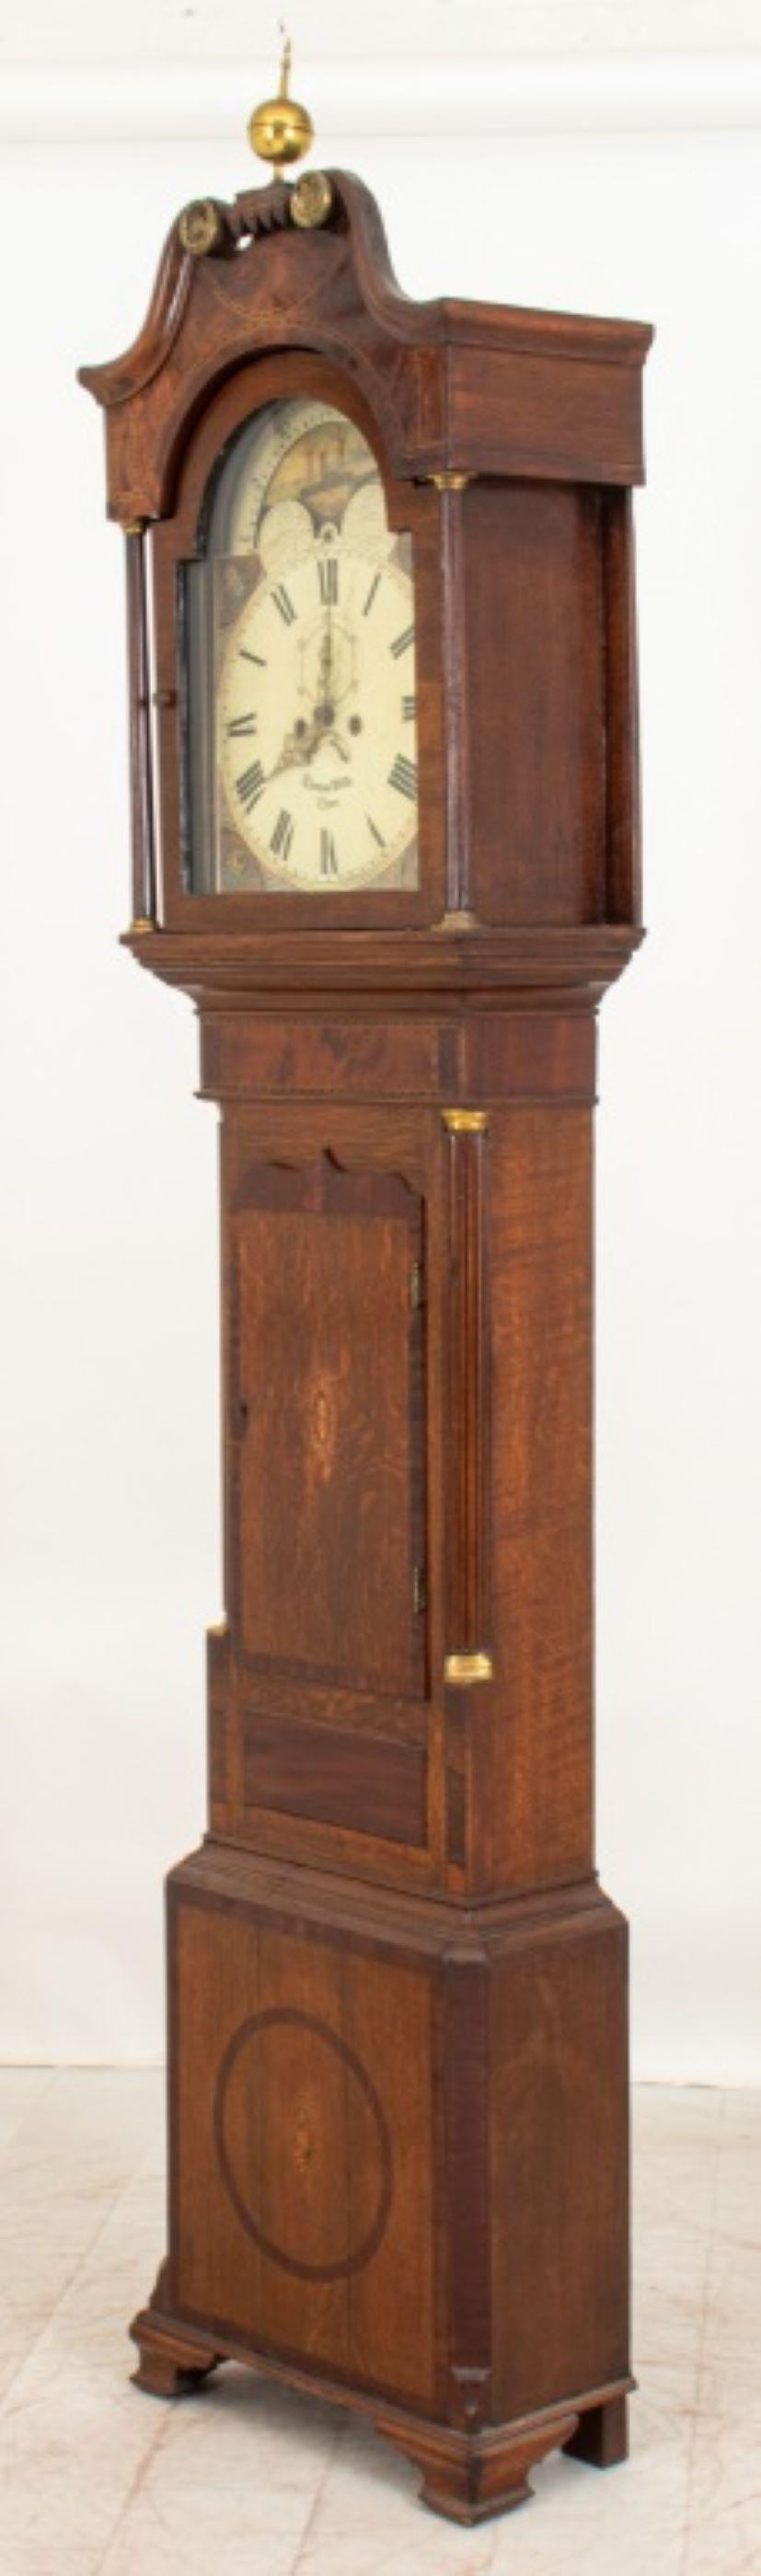 Thomas Wills George III Longcase Clock, 19th Century For Sale 7